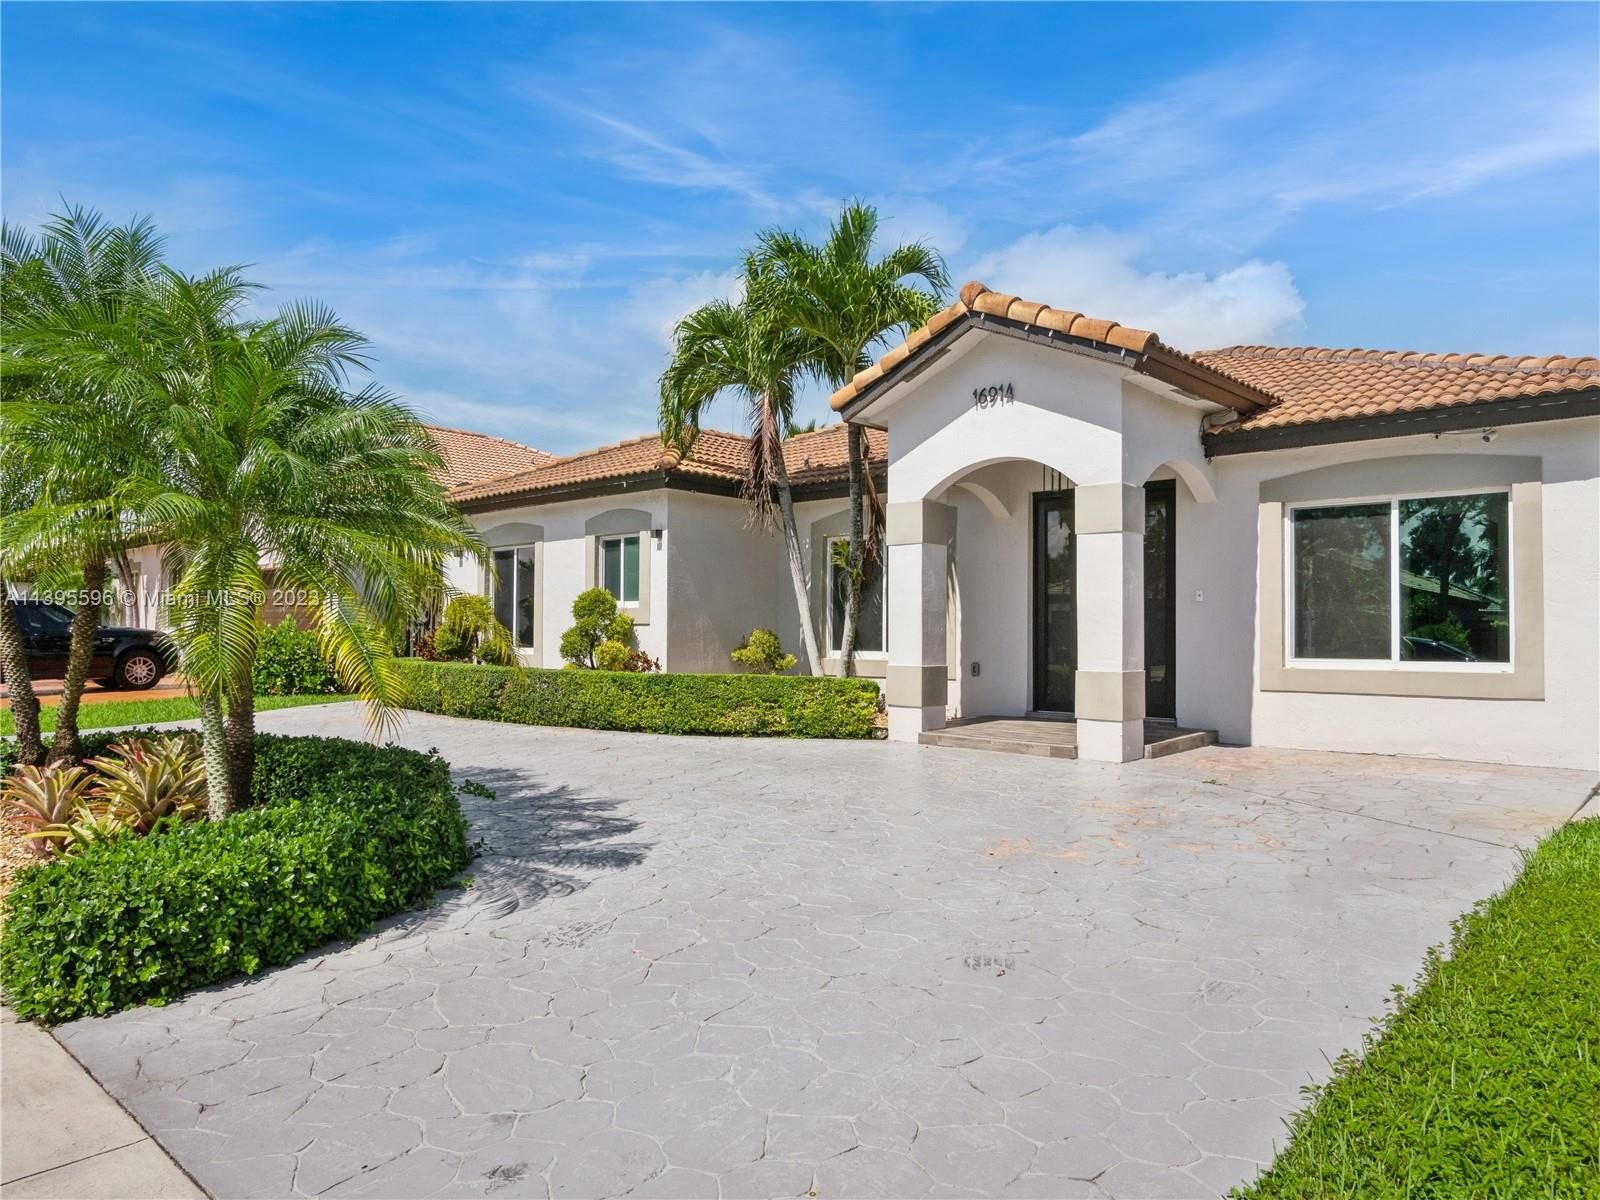 Real estate property located at 16914 89th Ct, Miami-Dade County, Miami Lakes, FL